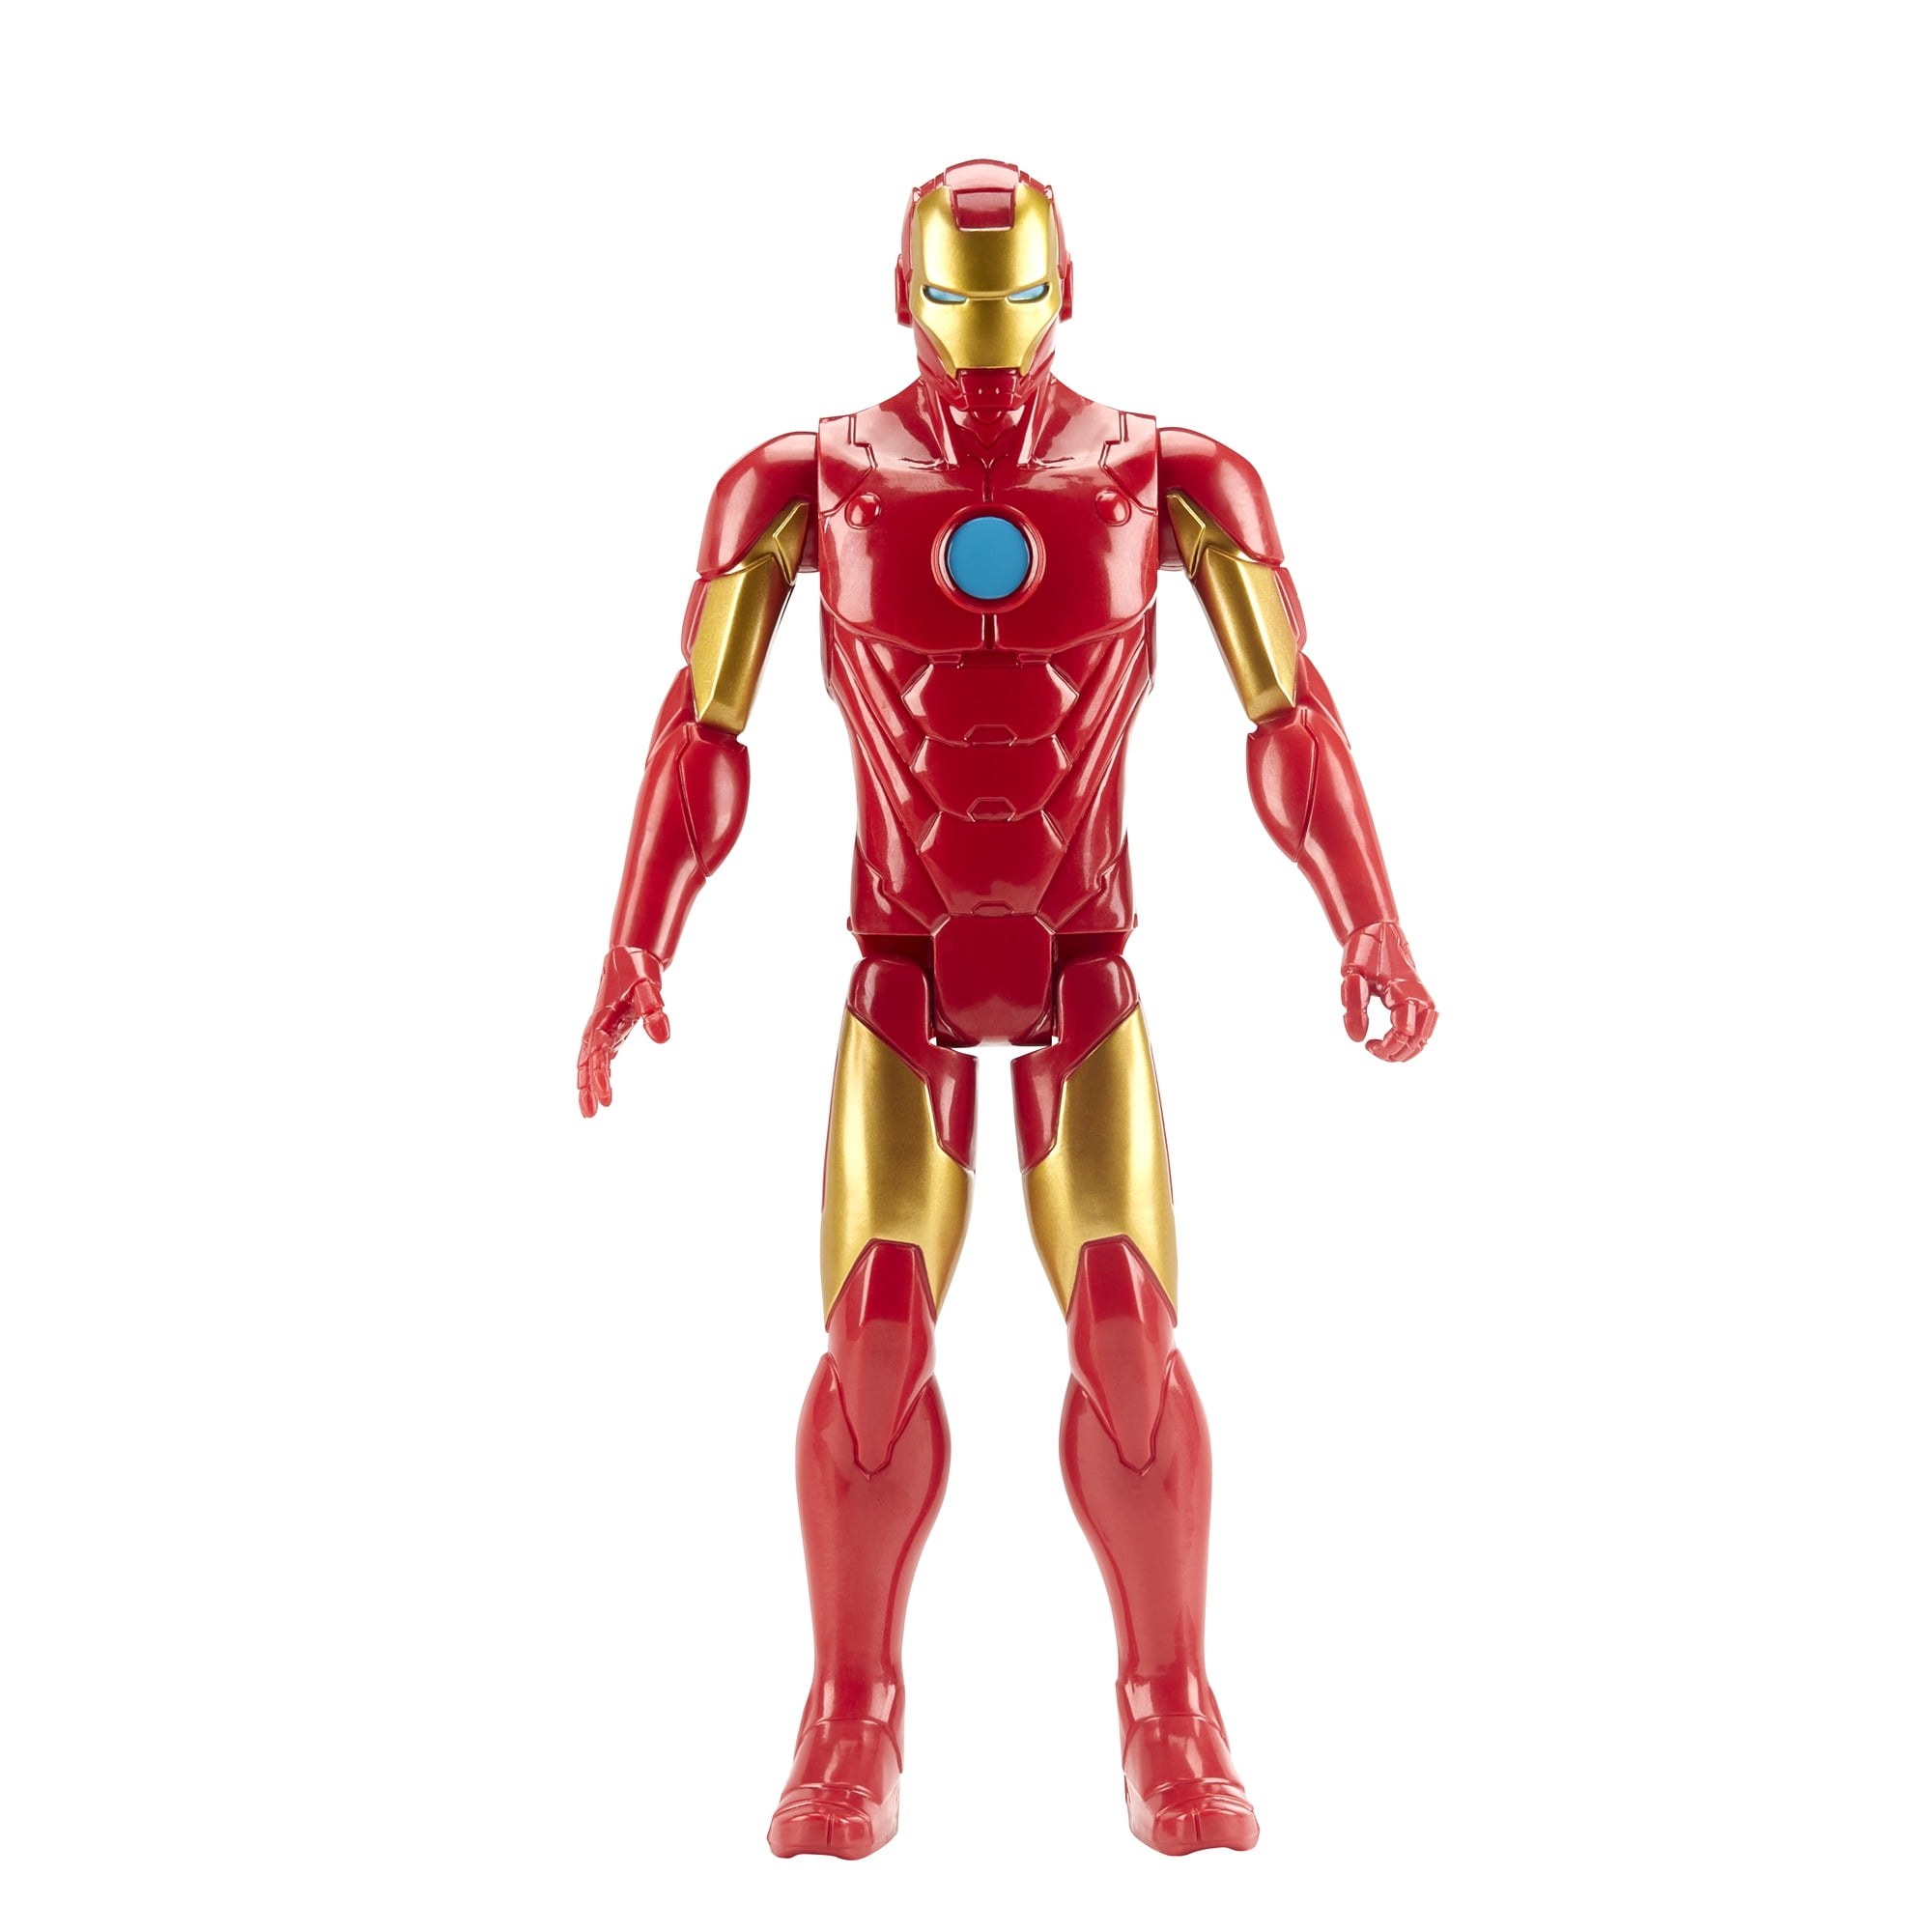 Marvel Iron Man 3-16" 40 cm titan hero classic series figure NEW IN BOX 